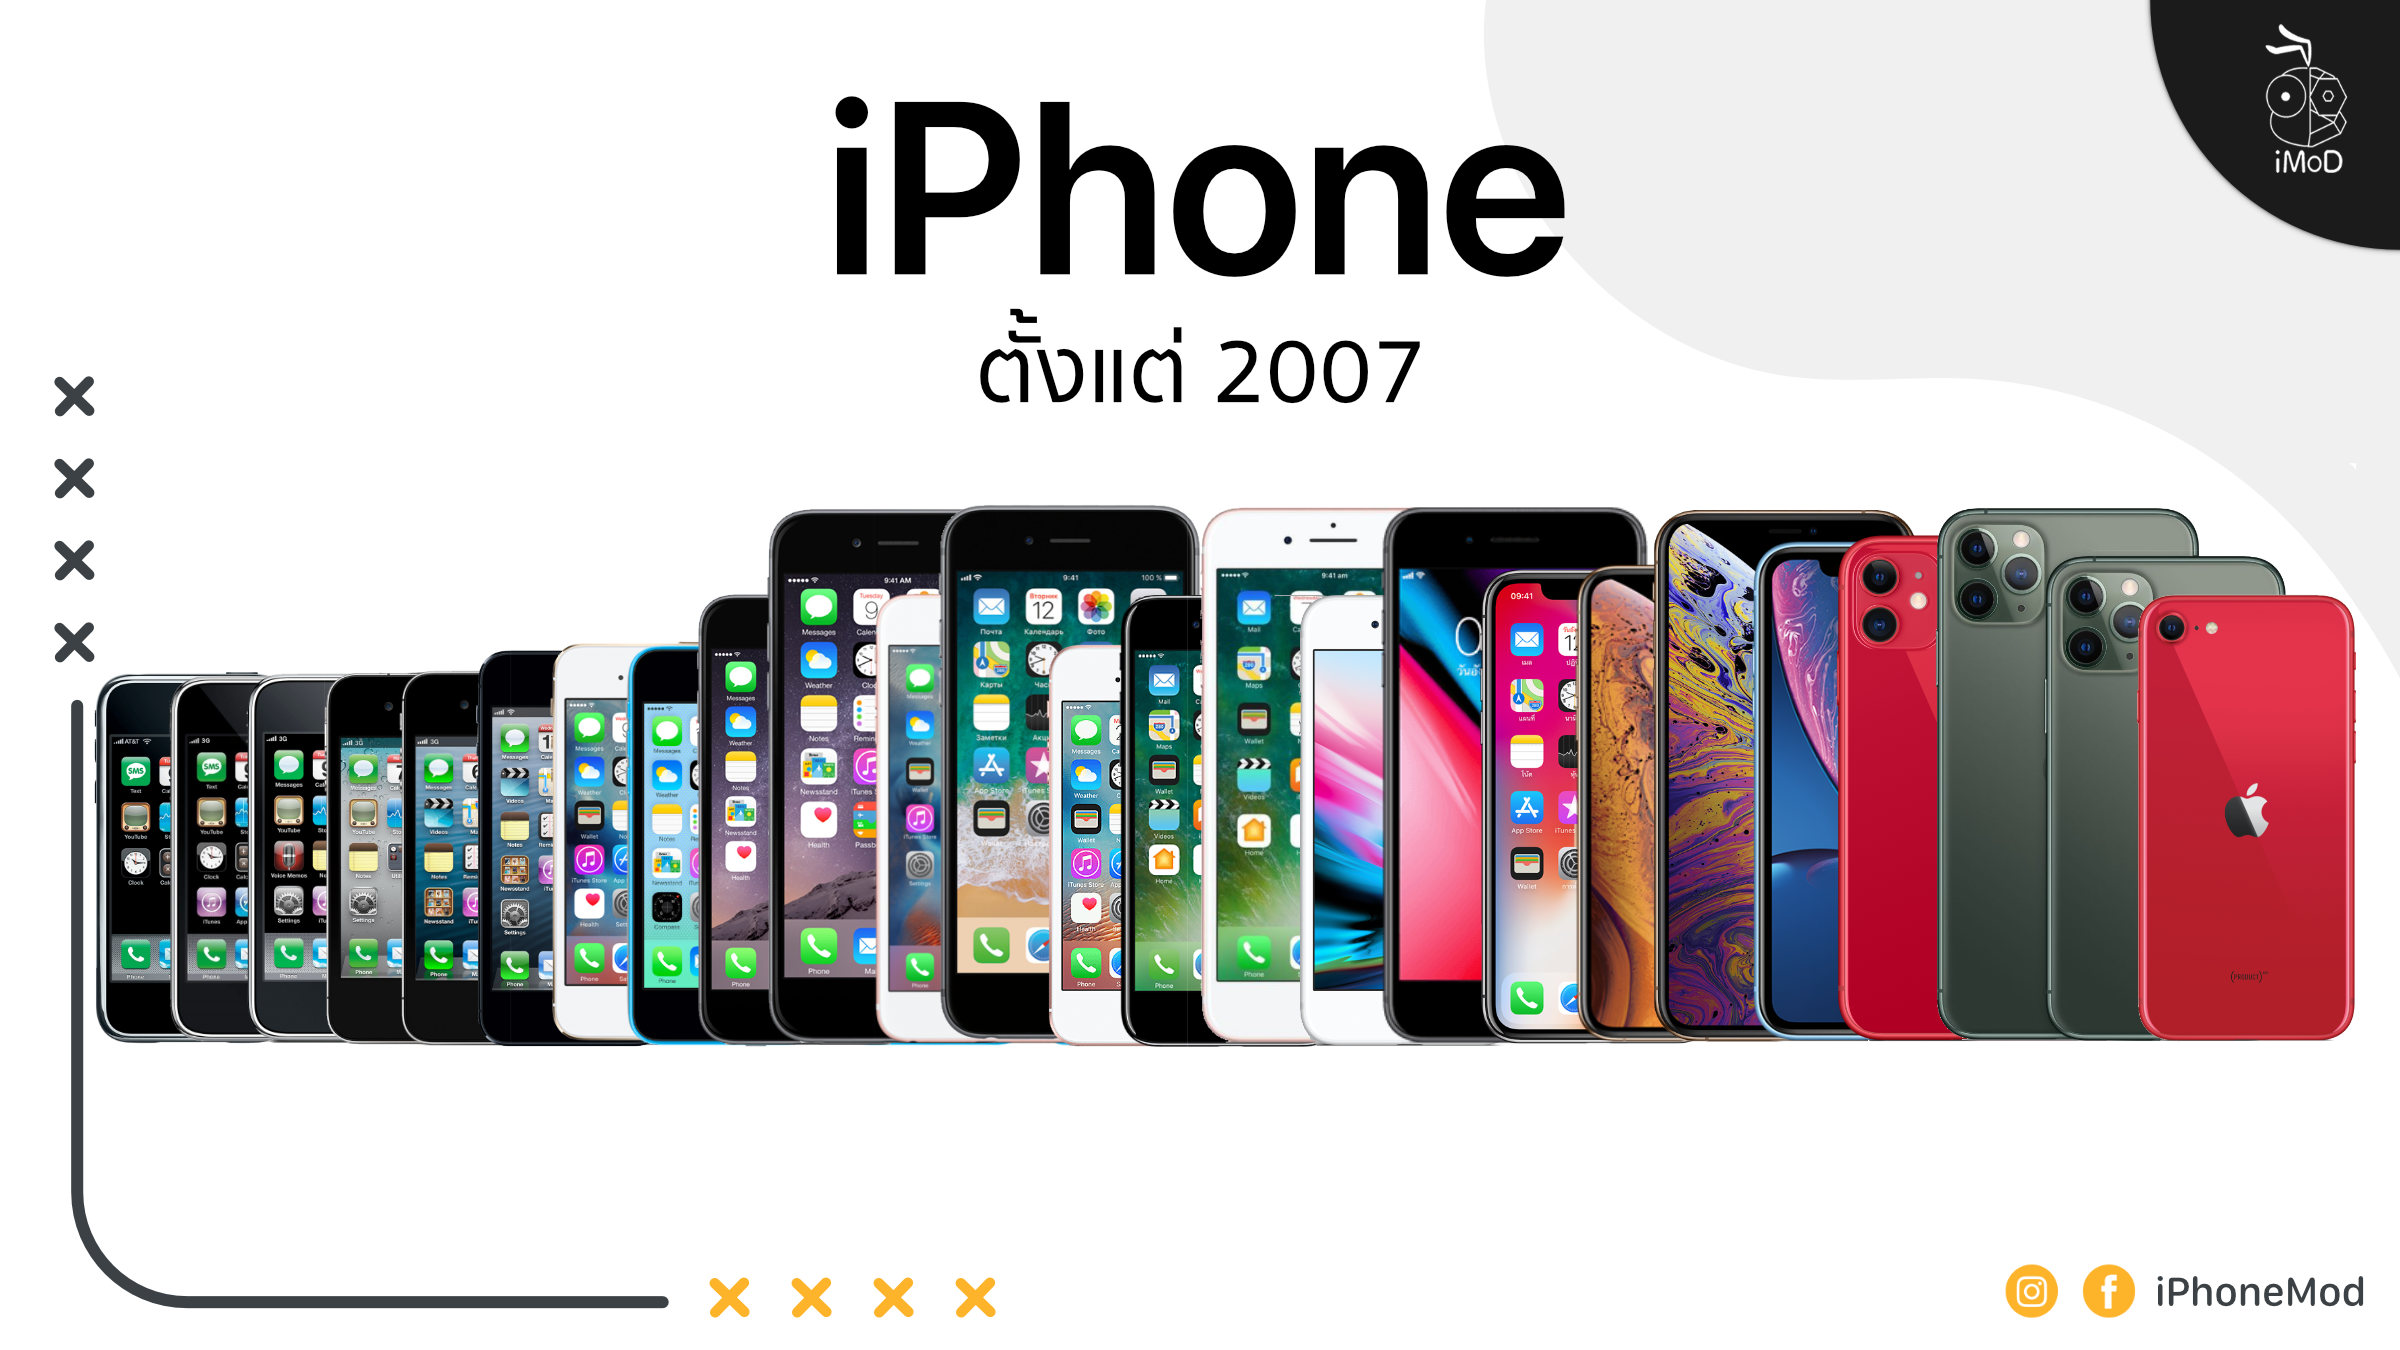 Timeline - iPhone รุ่นล่าสุด ปี 2020 มีทั้งหมดกี่รุ่น (14 ก.ย. 2563)